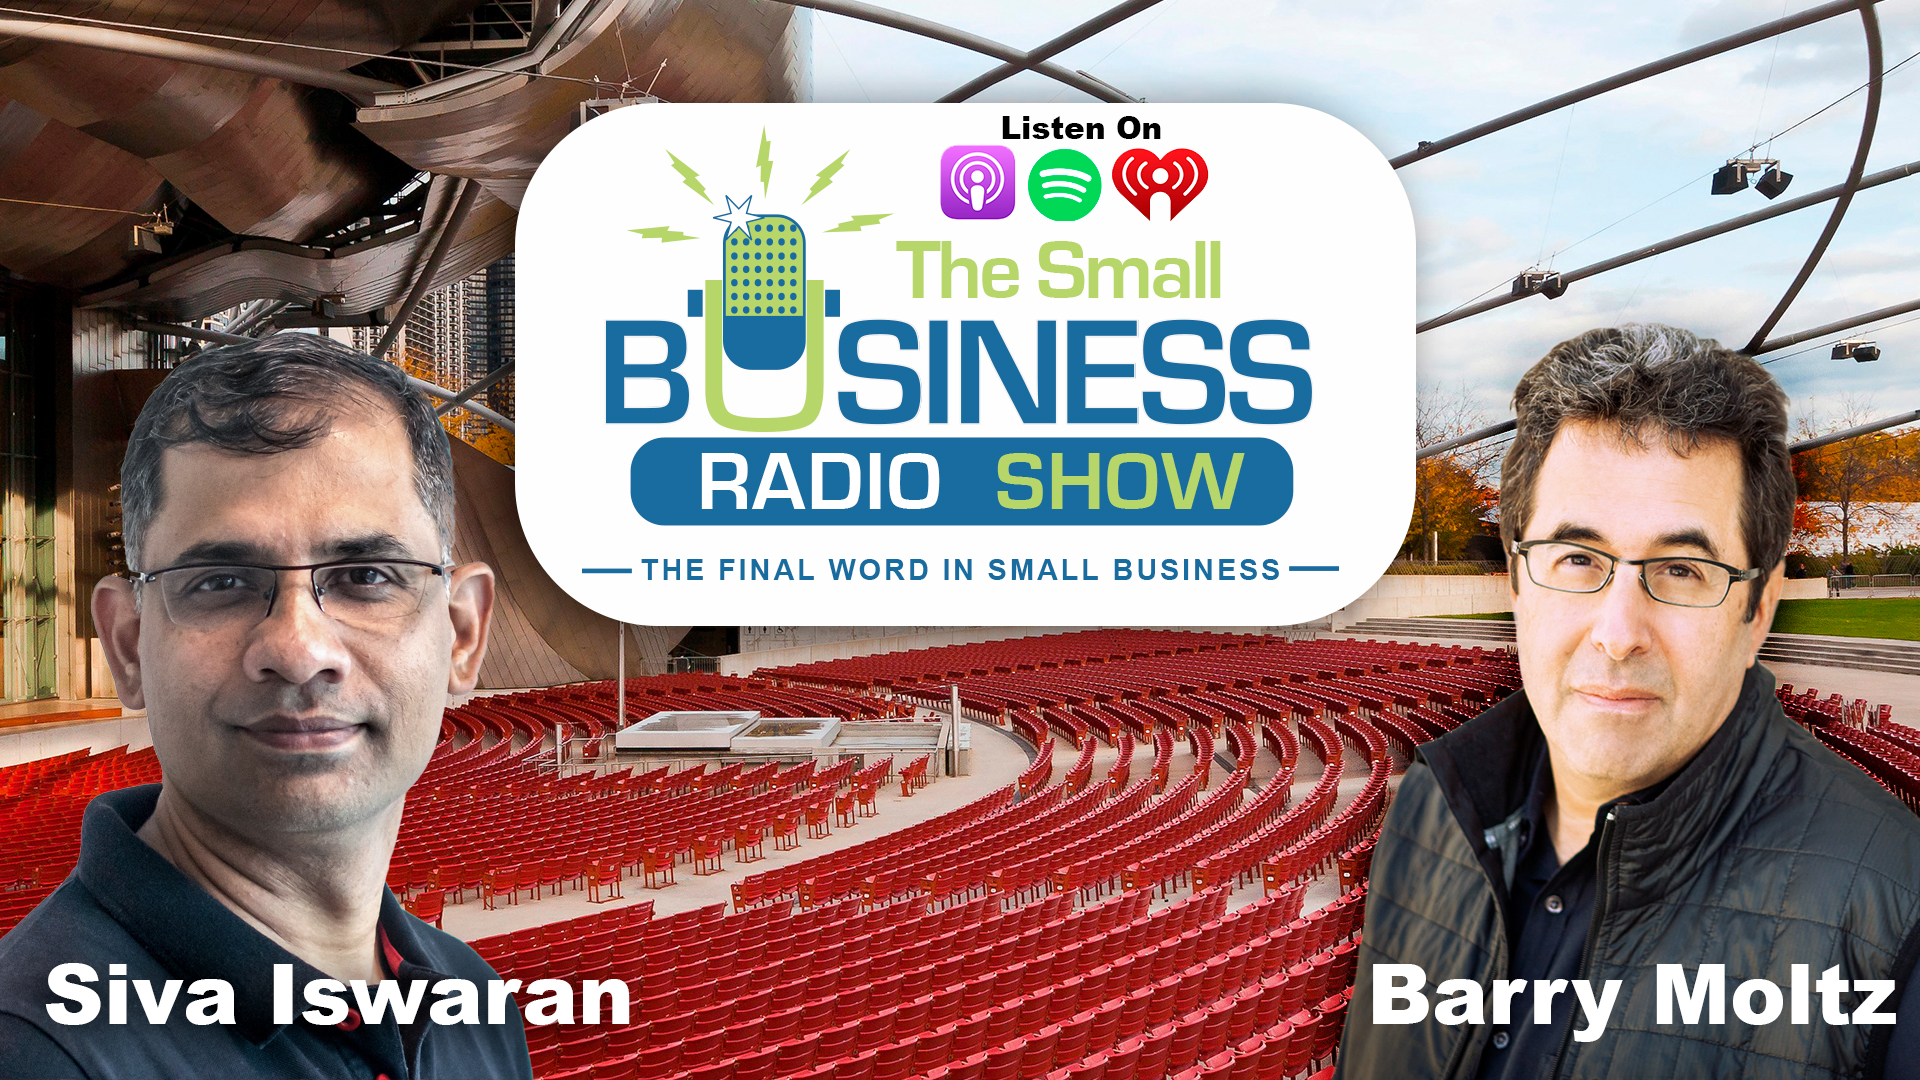 Siva Iswaran on The Small Business Radio Show